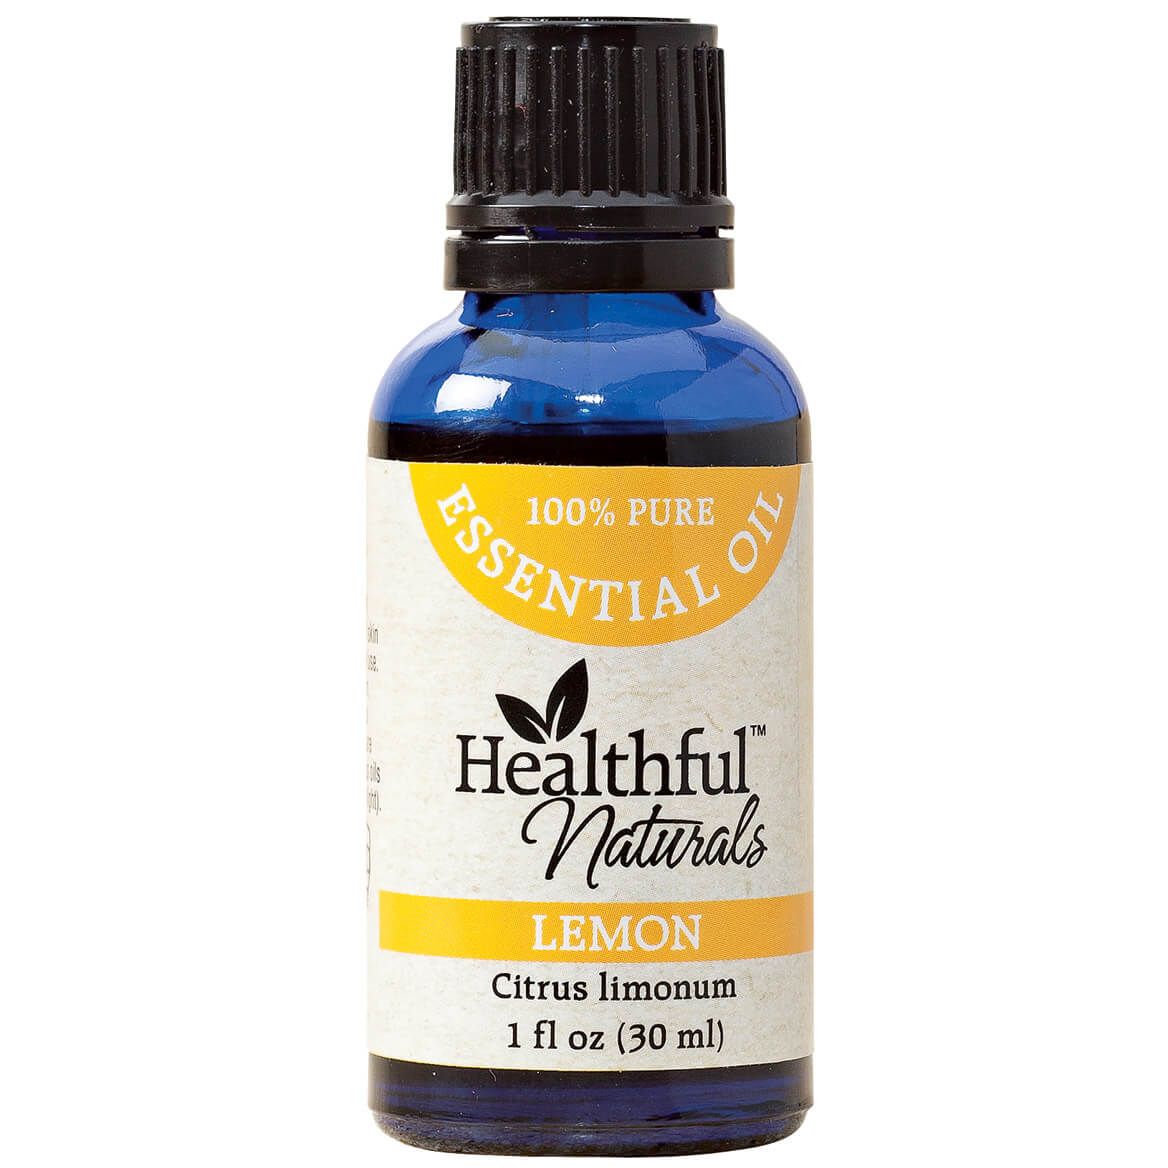 Healthful™ Naturals Lemon Essential Oil - 30 ml + '-' + 353461